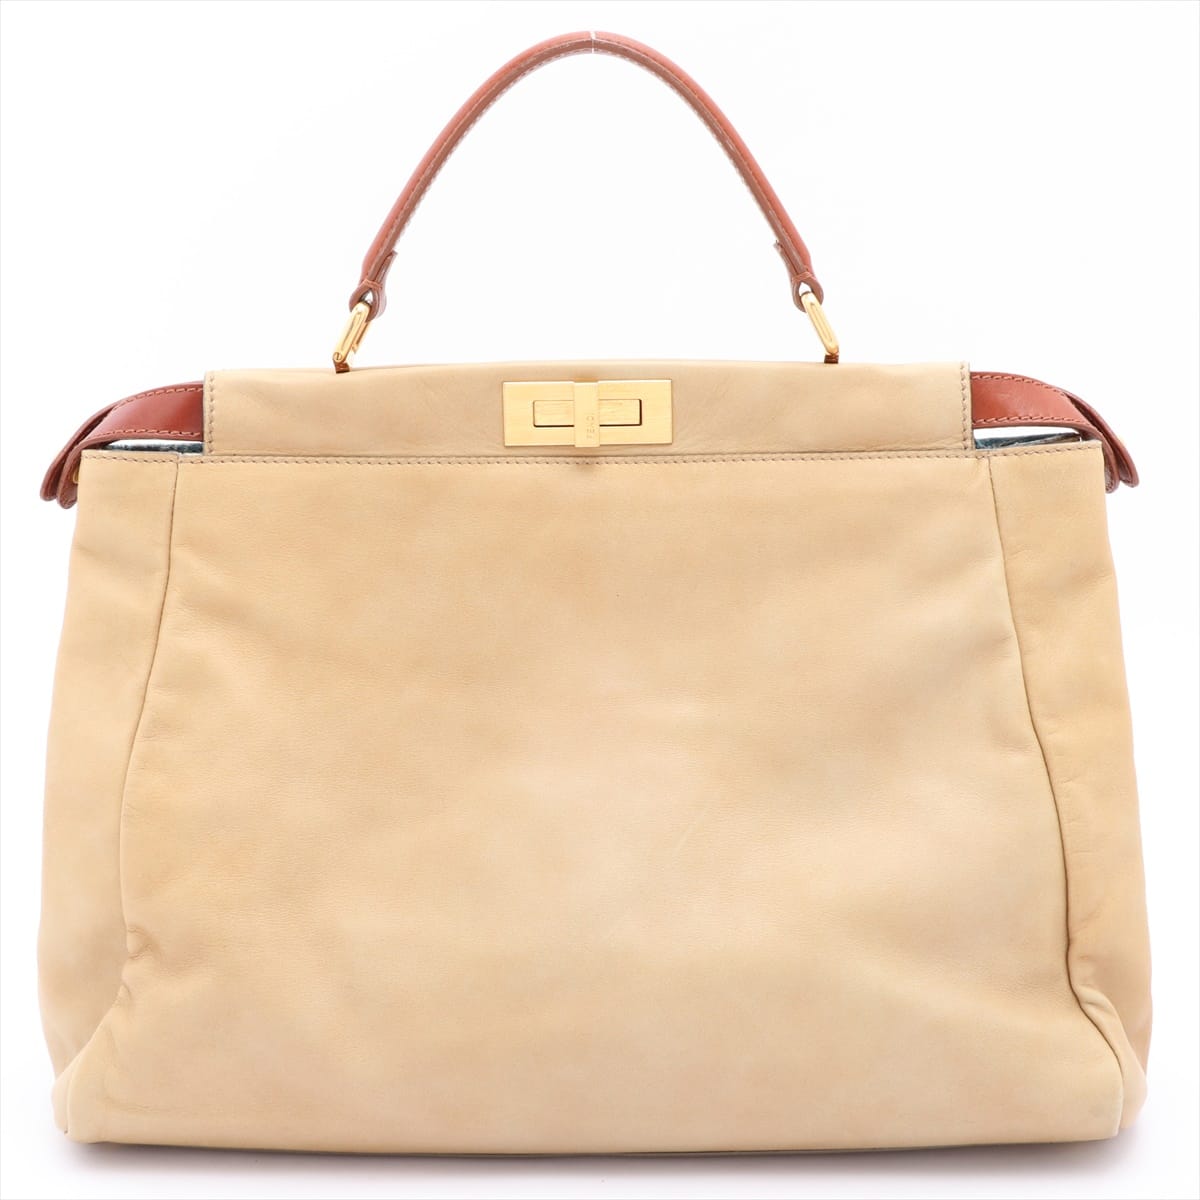 Fendi Peek-a-boo Denim & leather 2way handbag Beige 8BN210